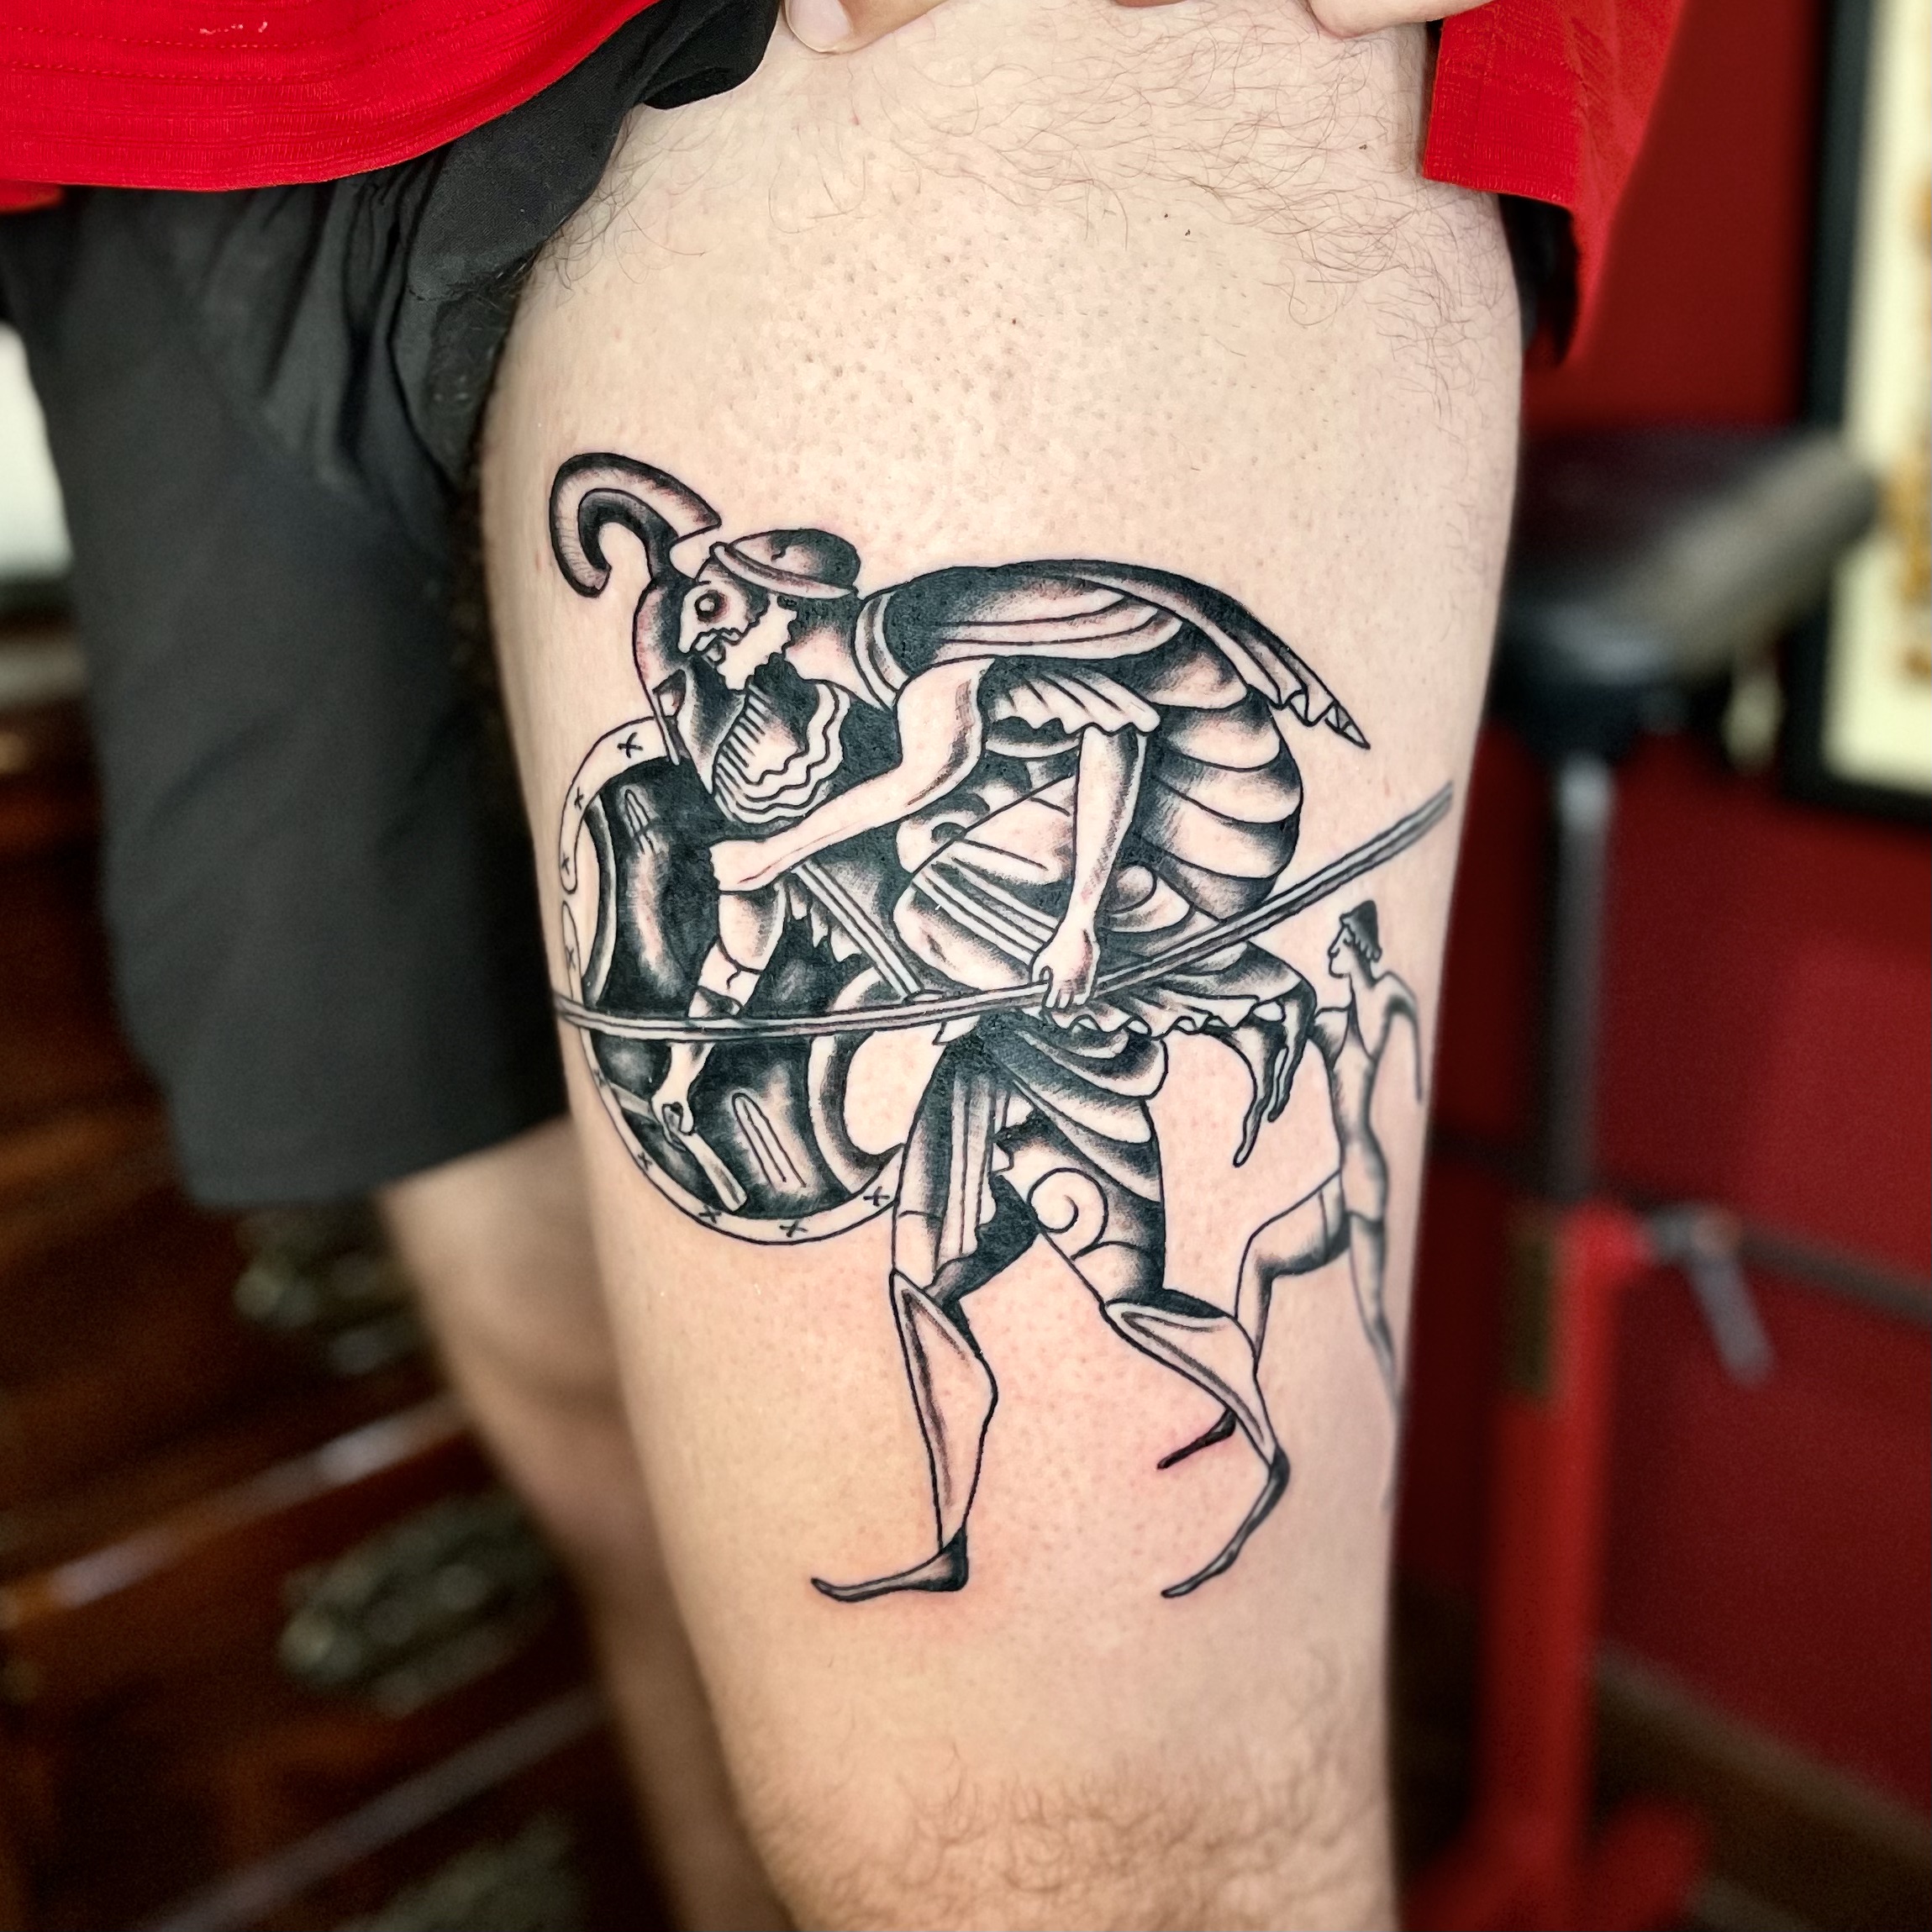 Tattoo of a spartan on a man's leg